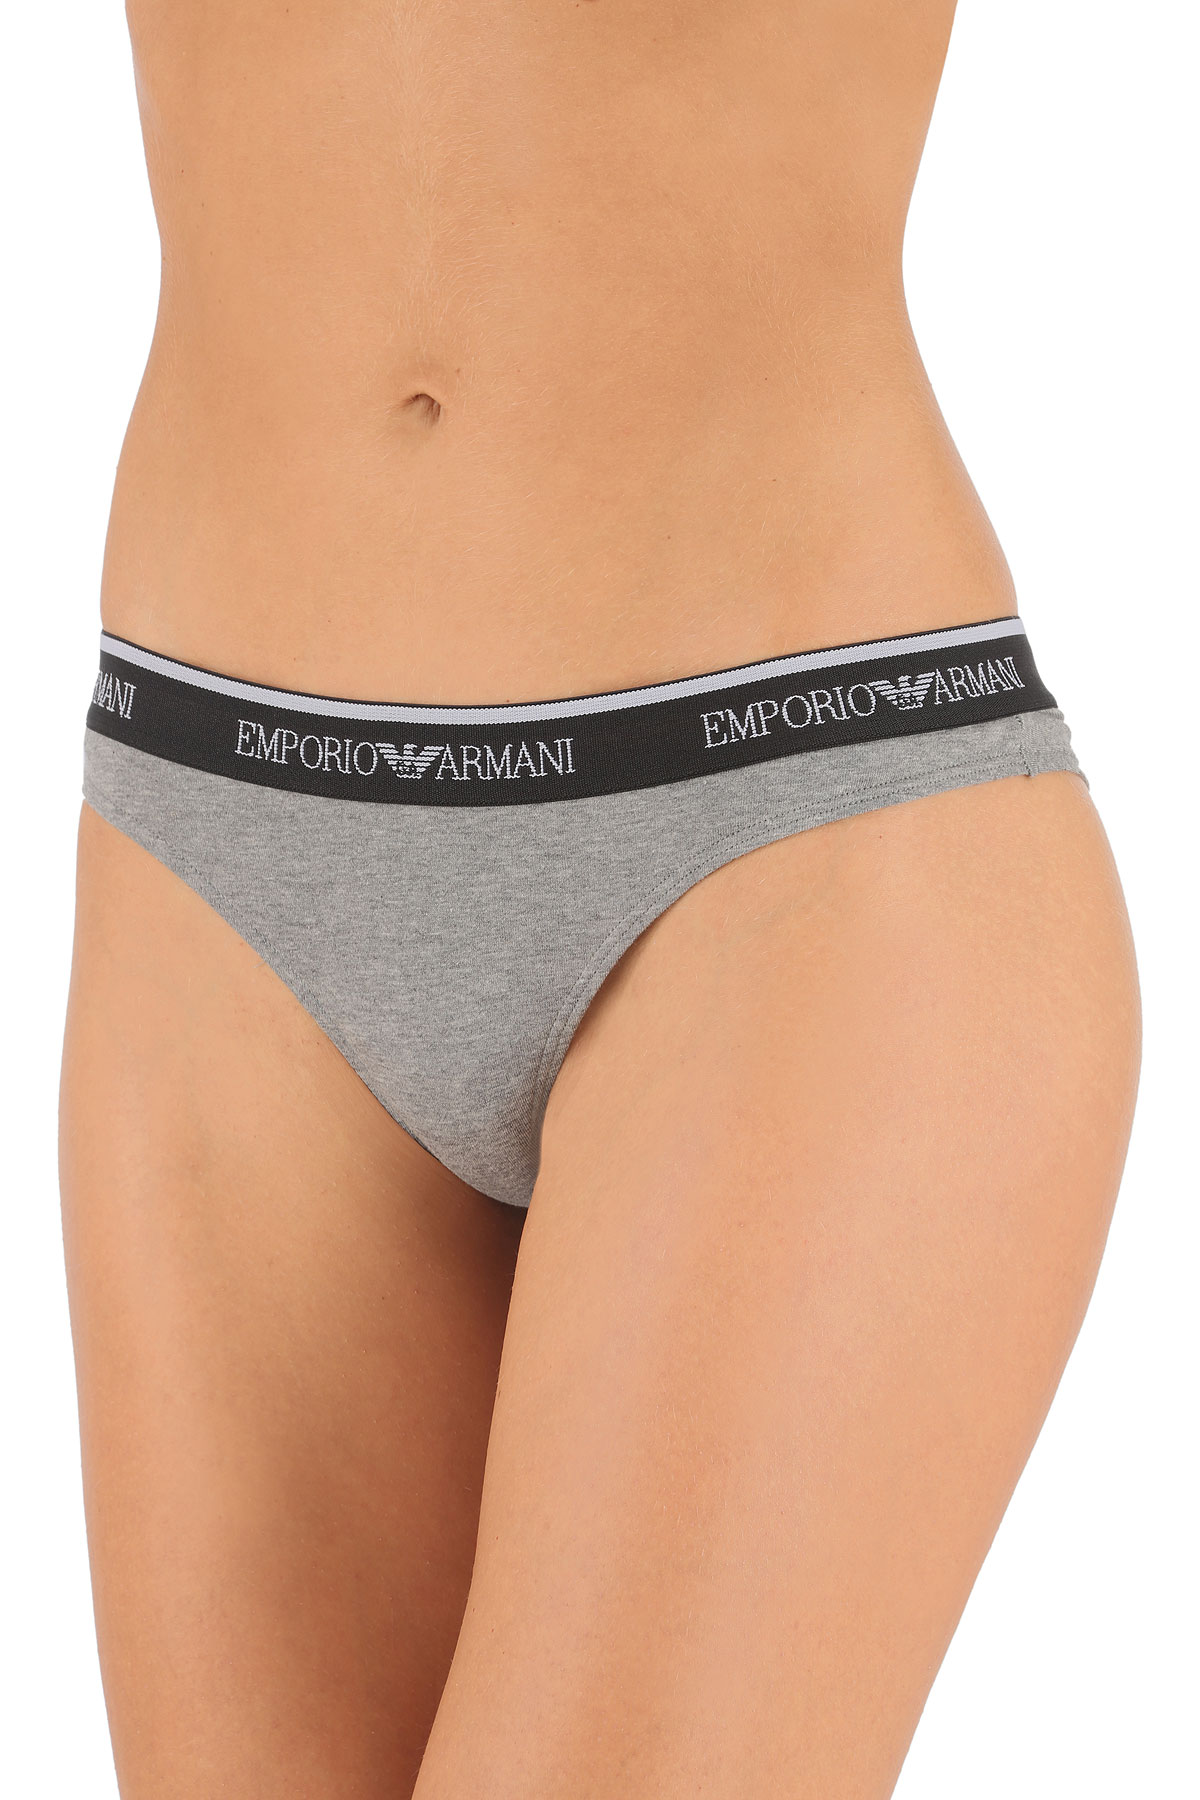 armani ladies underwear